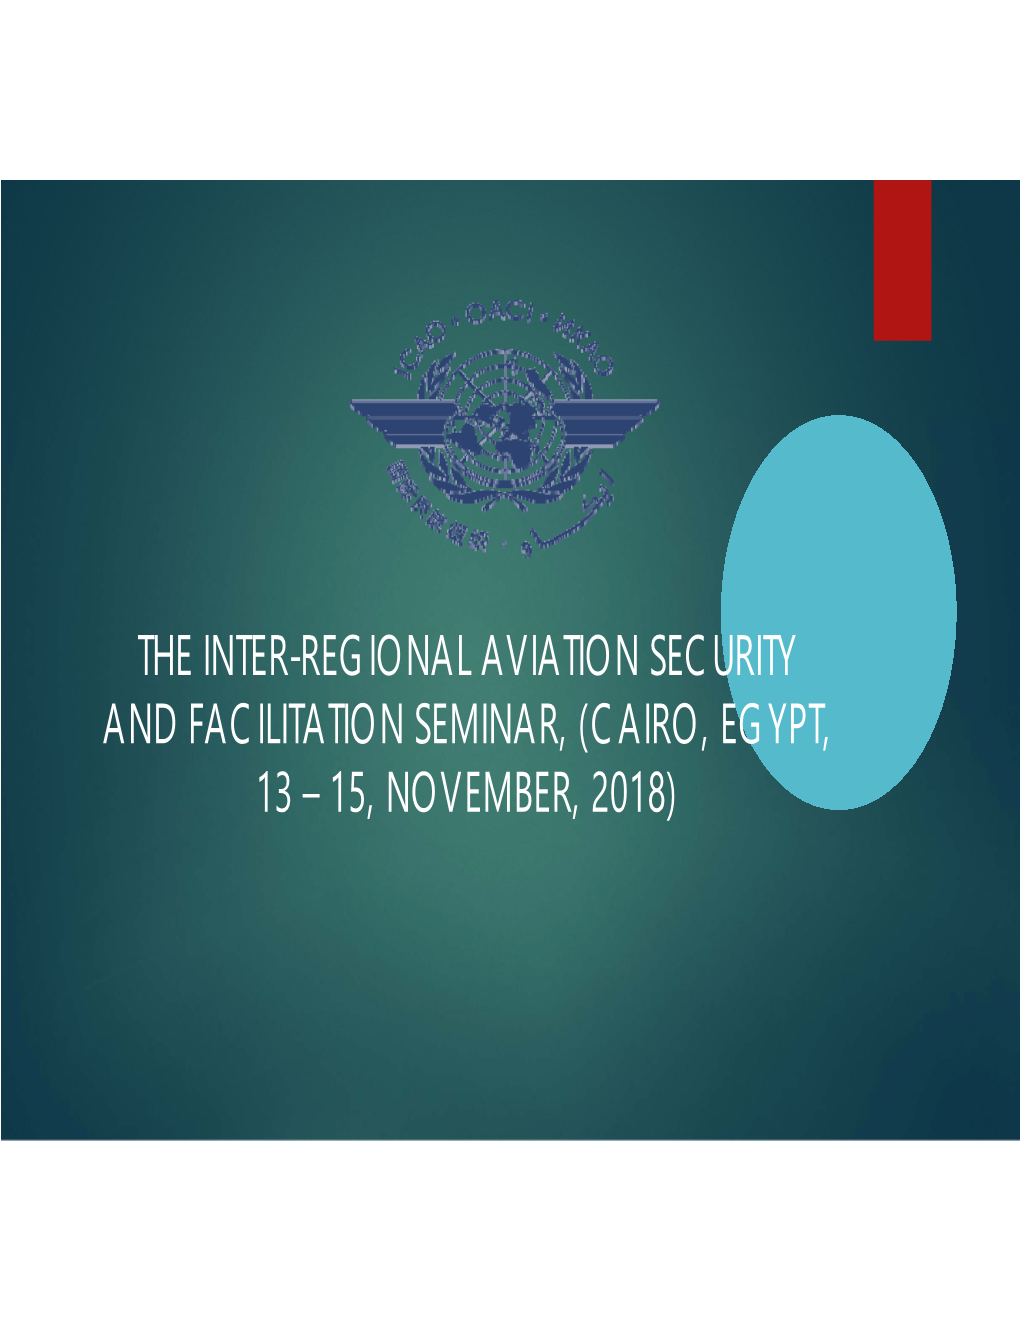 The Inter-Regional Aviation Security and Facilitation Seminar